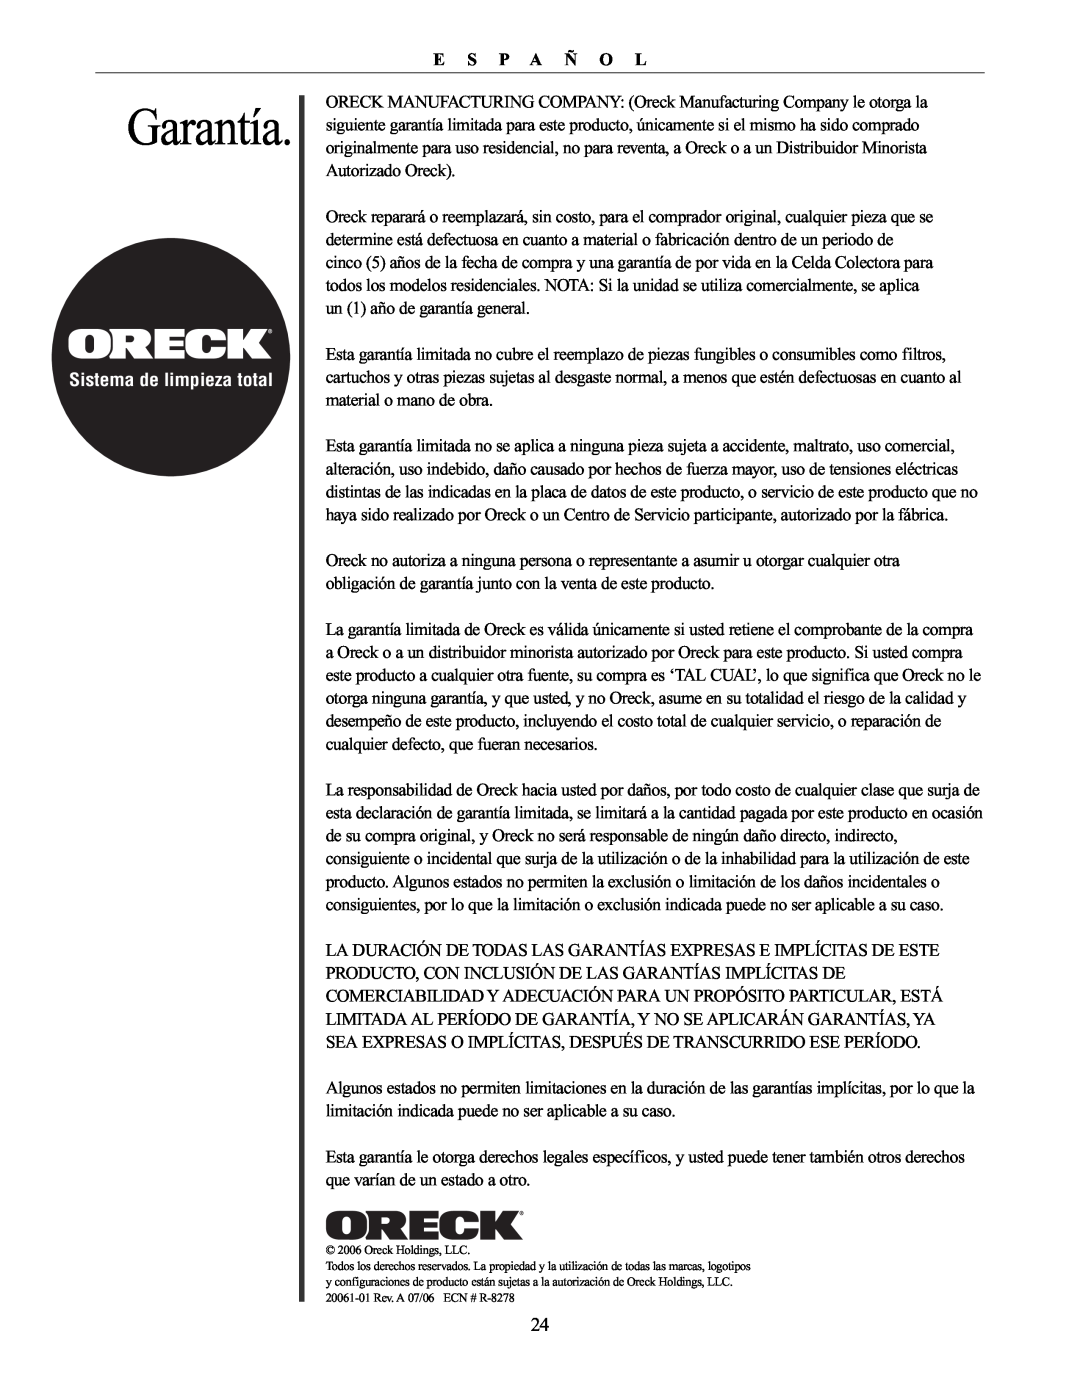 Oreck 20061-01Rev.A manual Garantía, Sistema de limpieza total, E S P A Ñ O L, Oreck Holdings, LLC 